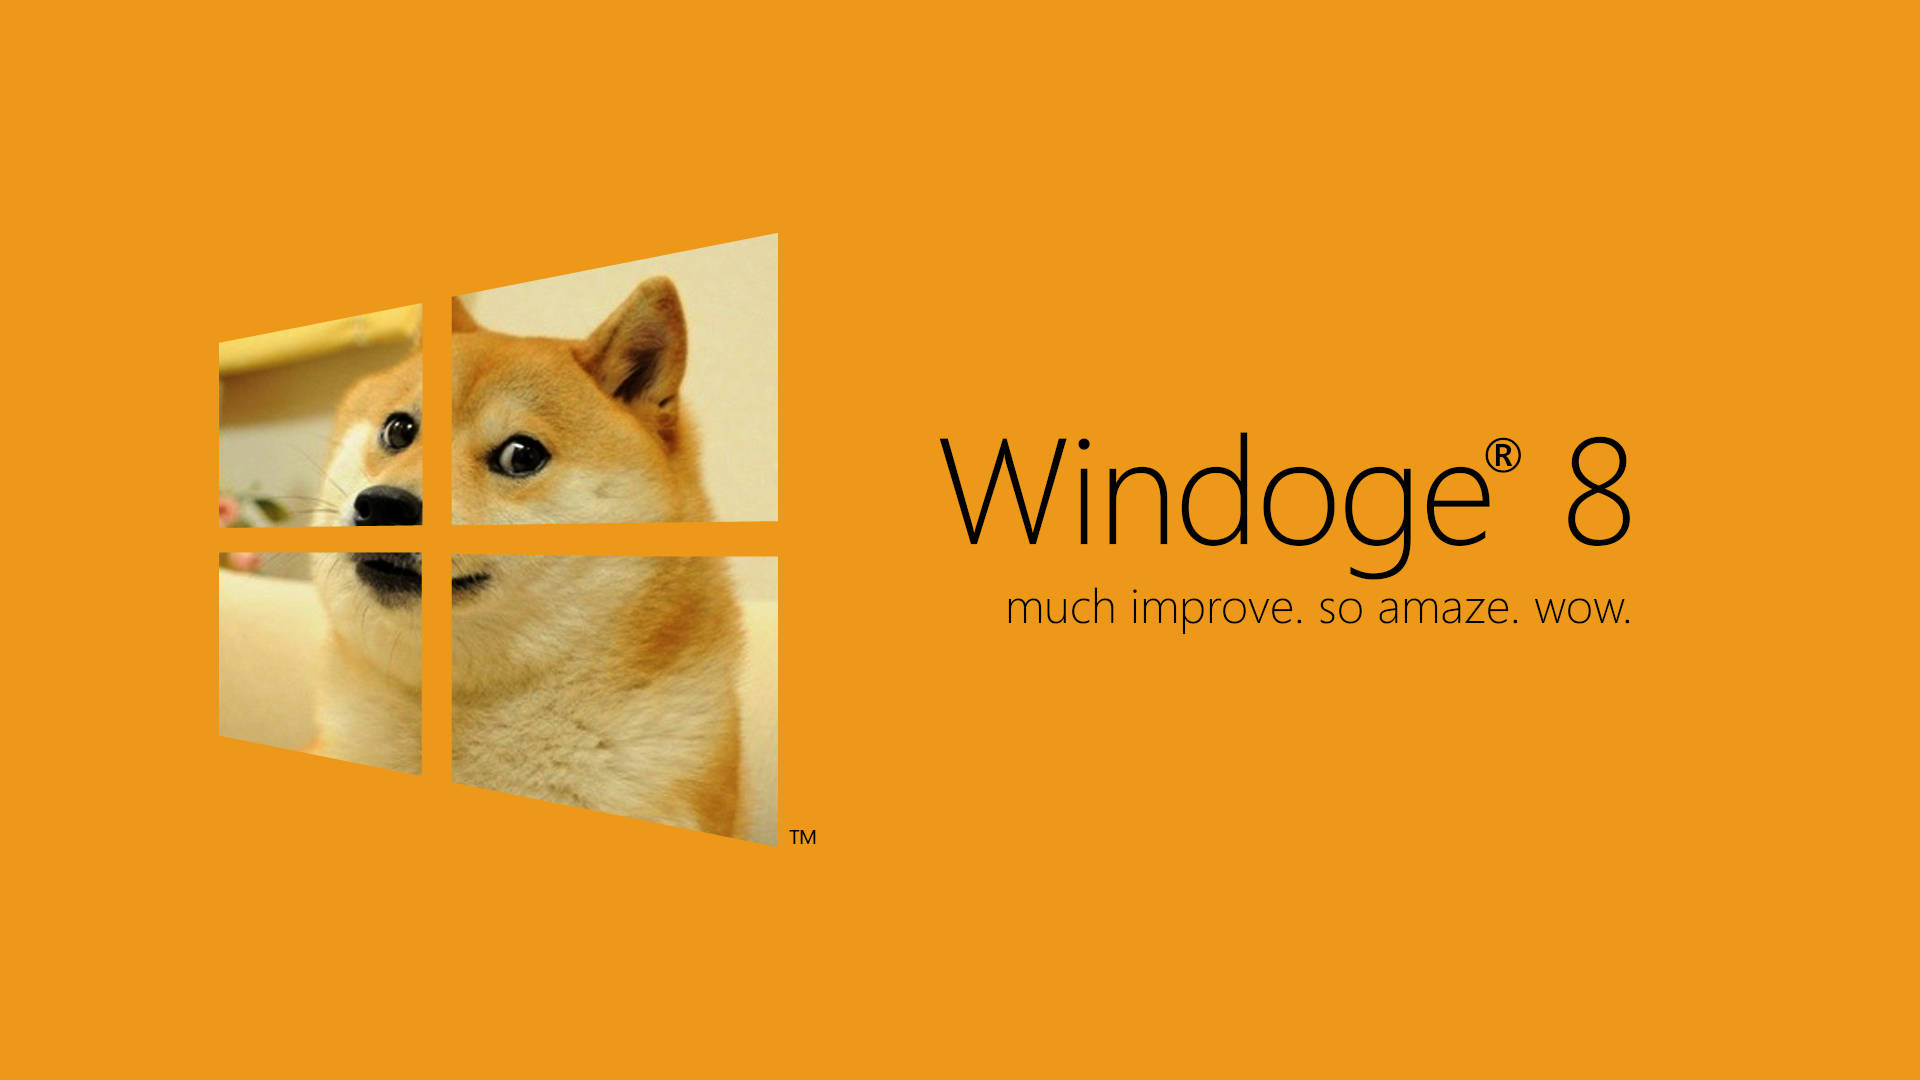 Windoge doge dank meme parody of Windows wallpaper.